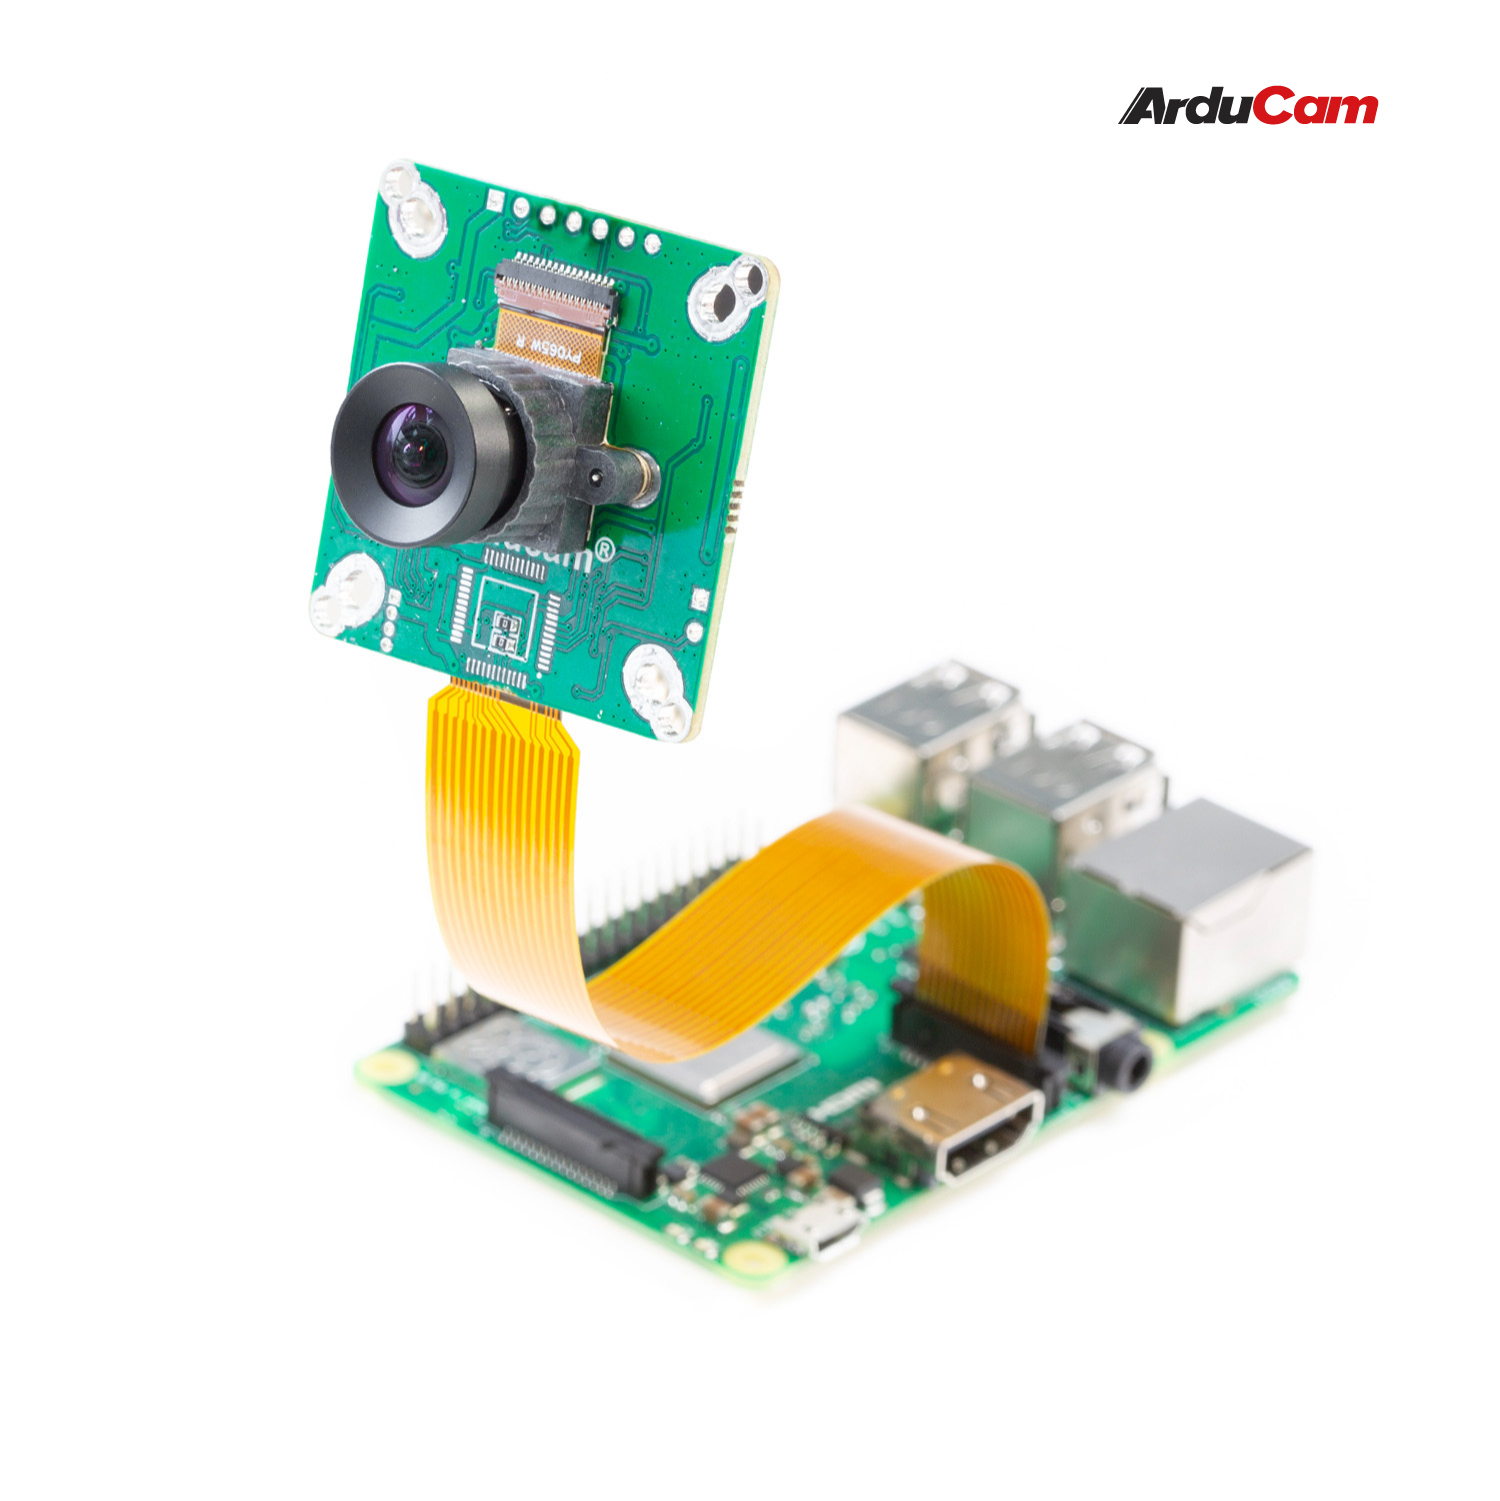 OV9281 MIPI 1MP Camera Board with M12 Mount Lens Arducam Monochrome Global Shutter Camera Module for Raspberry Pi 